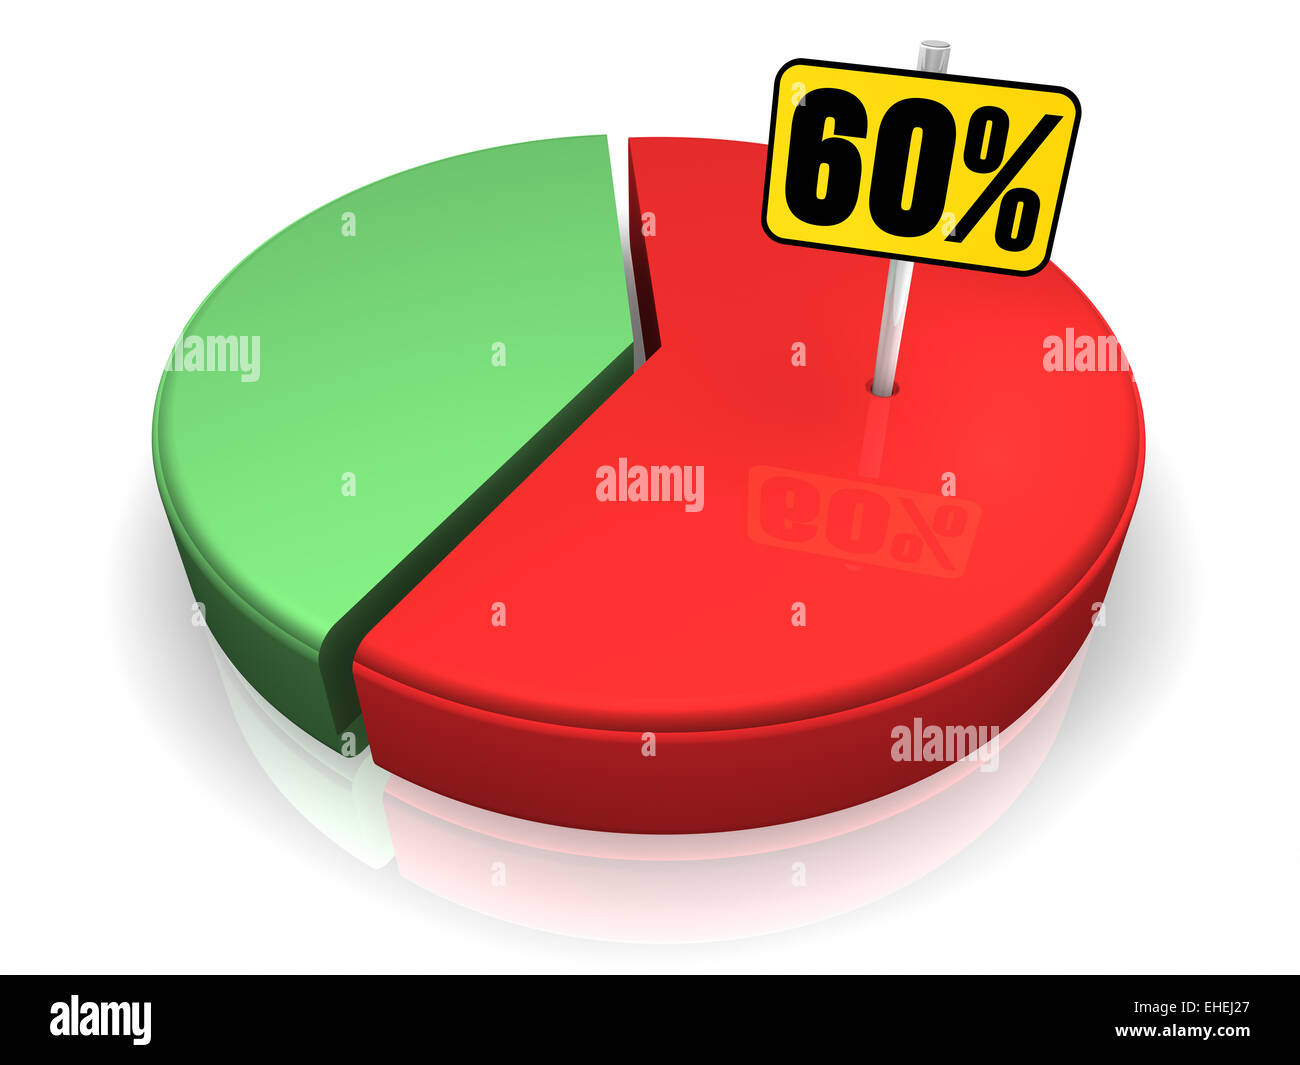 Pie Chart 60 Percent Stock Photo